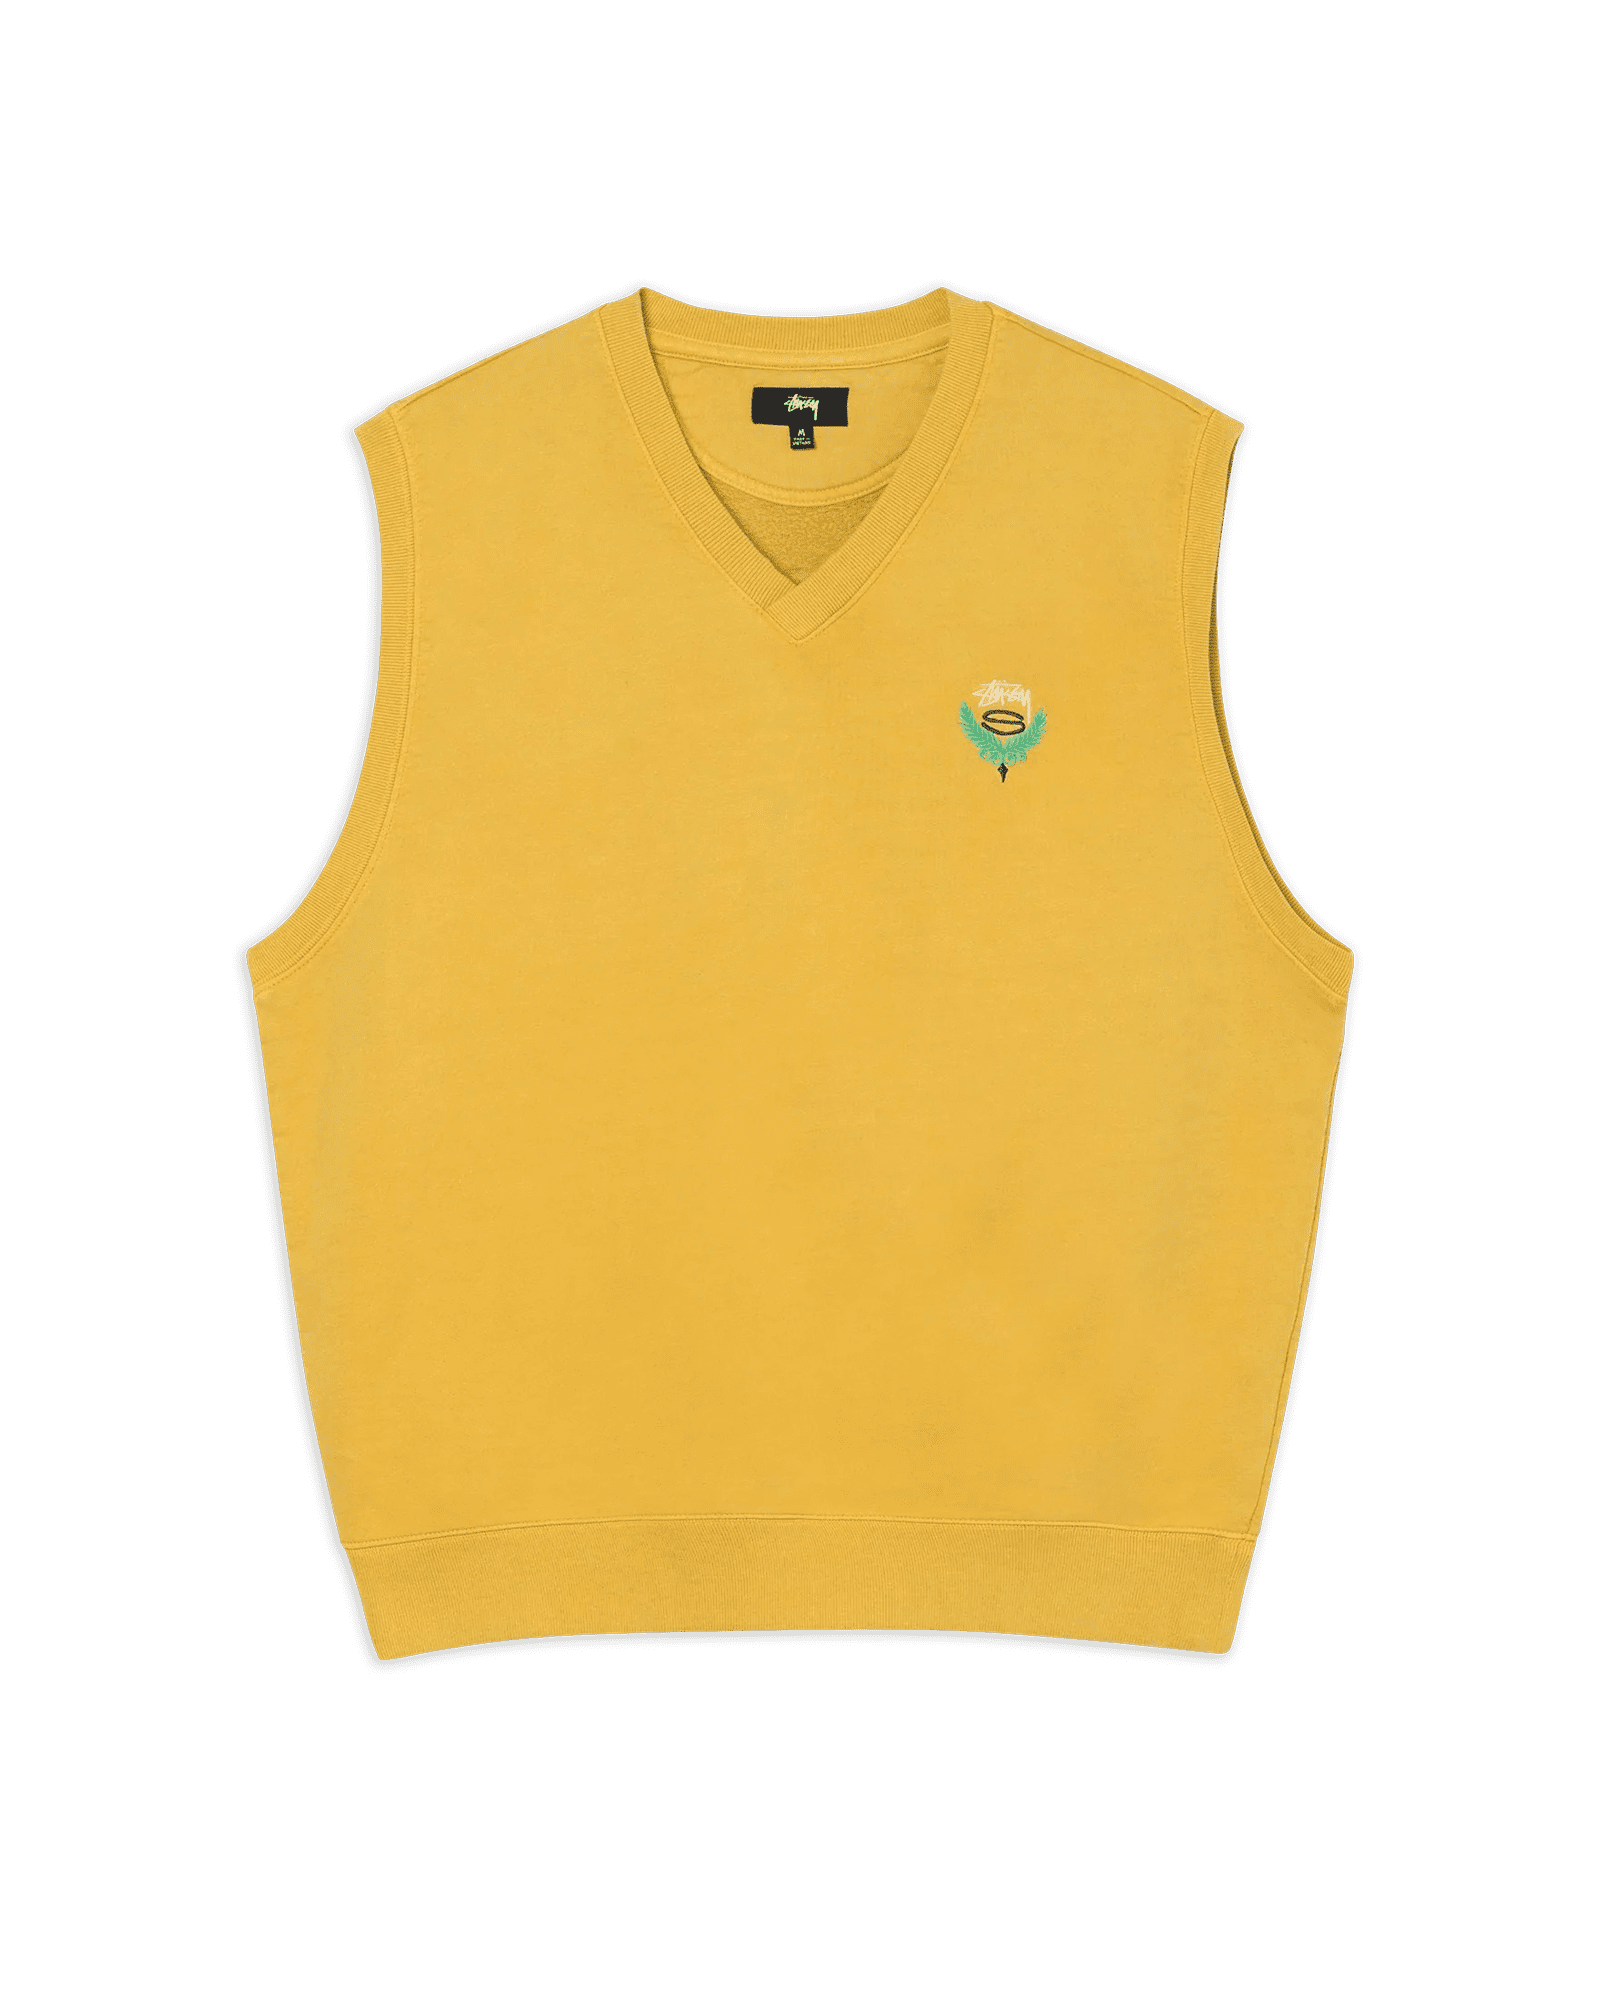 Fleece Vest $41 Stüssy Tops Vest Yellow